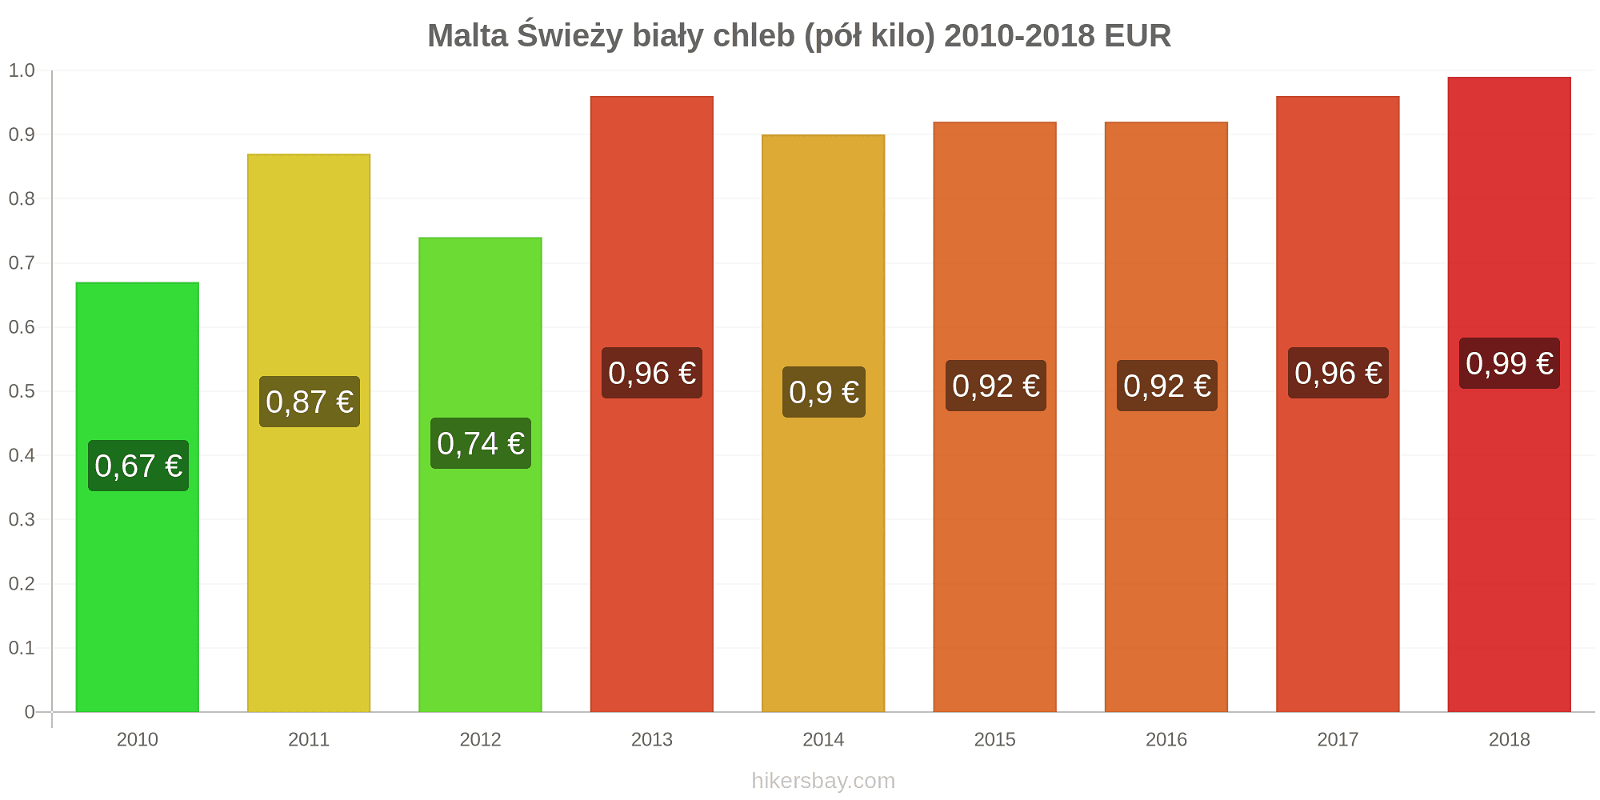 Malta zmiany cen Chleb pół kilo hikersbay.com